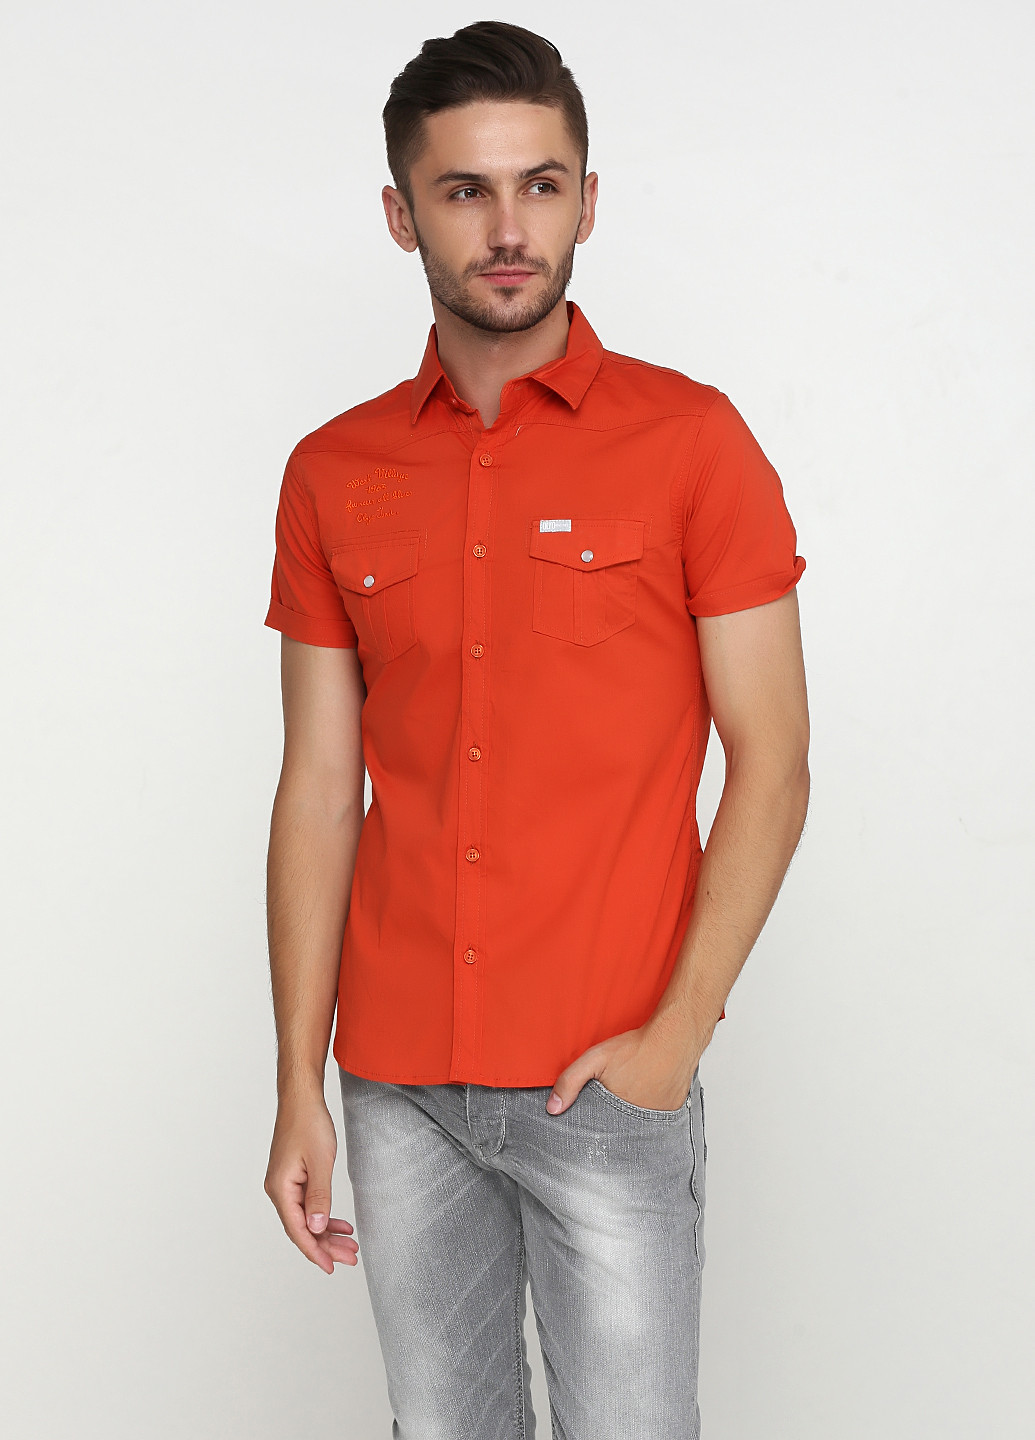 Оранжево-красная кэжуал рубашка Olyo с коротким рукавом